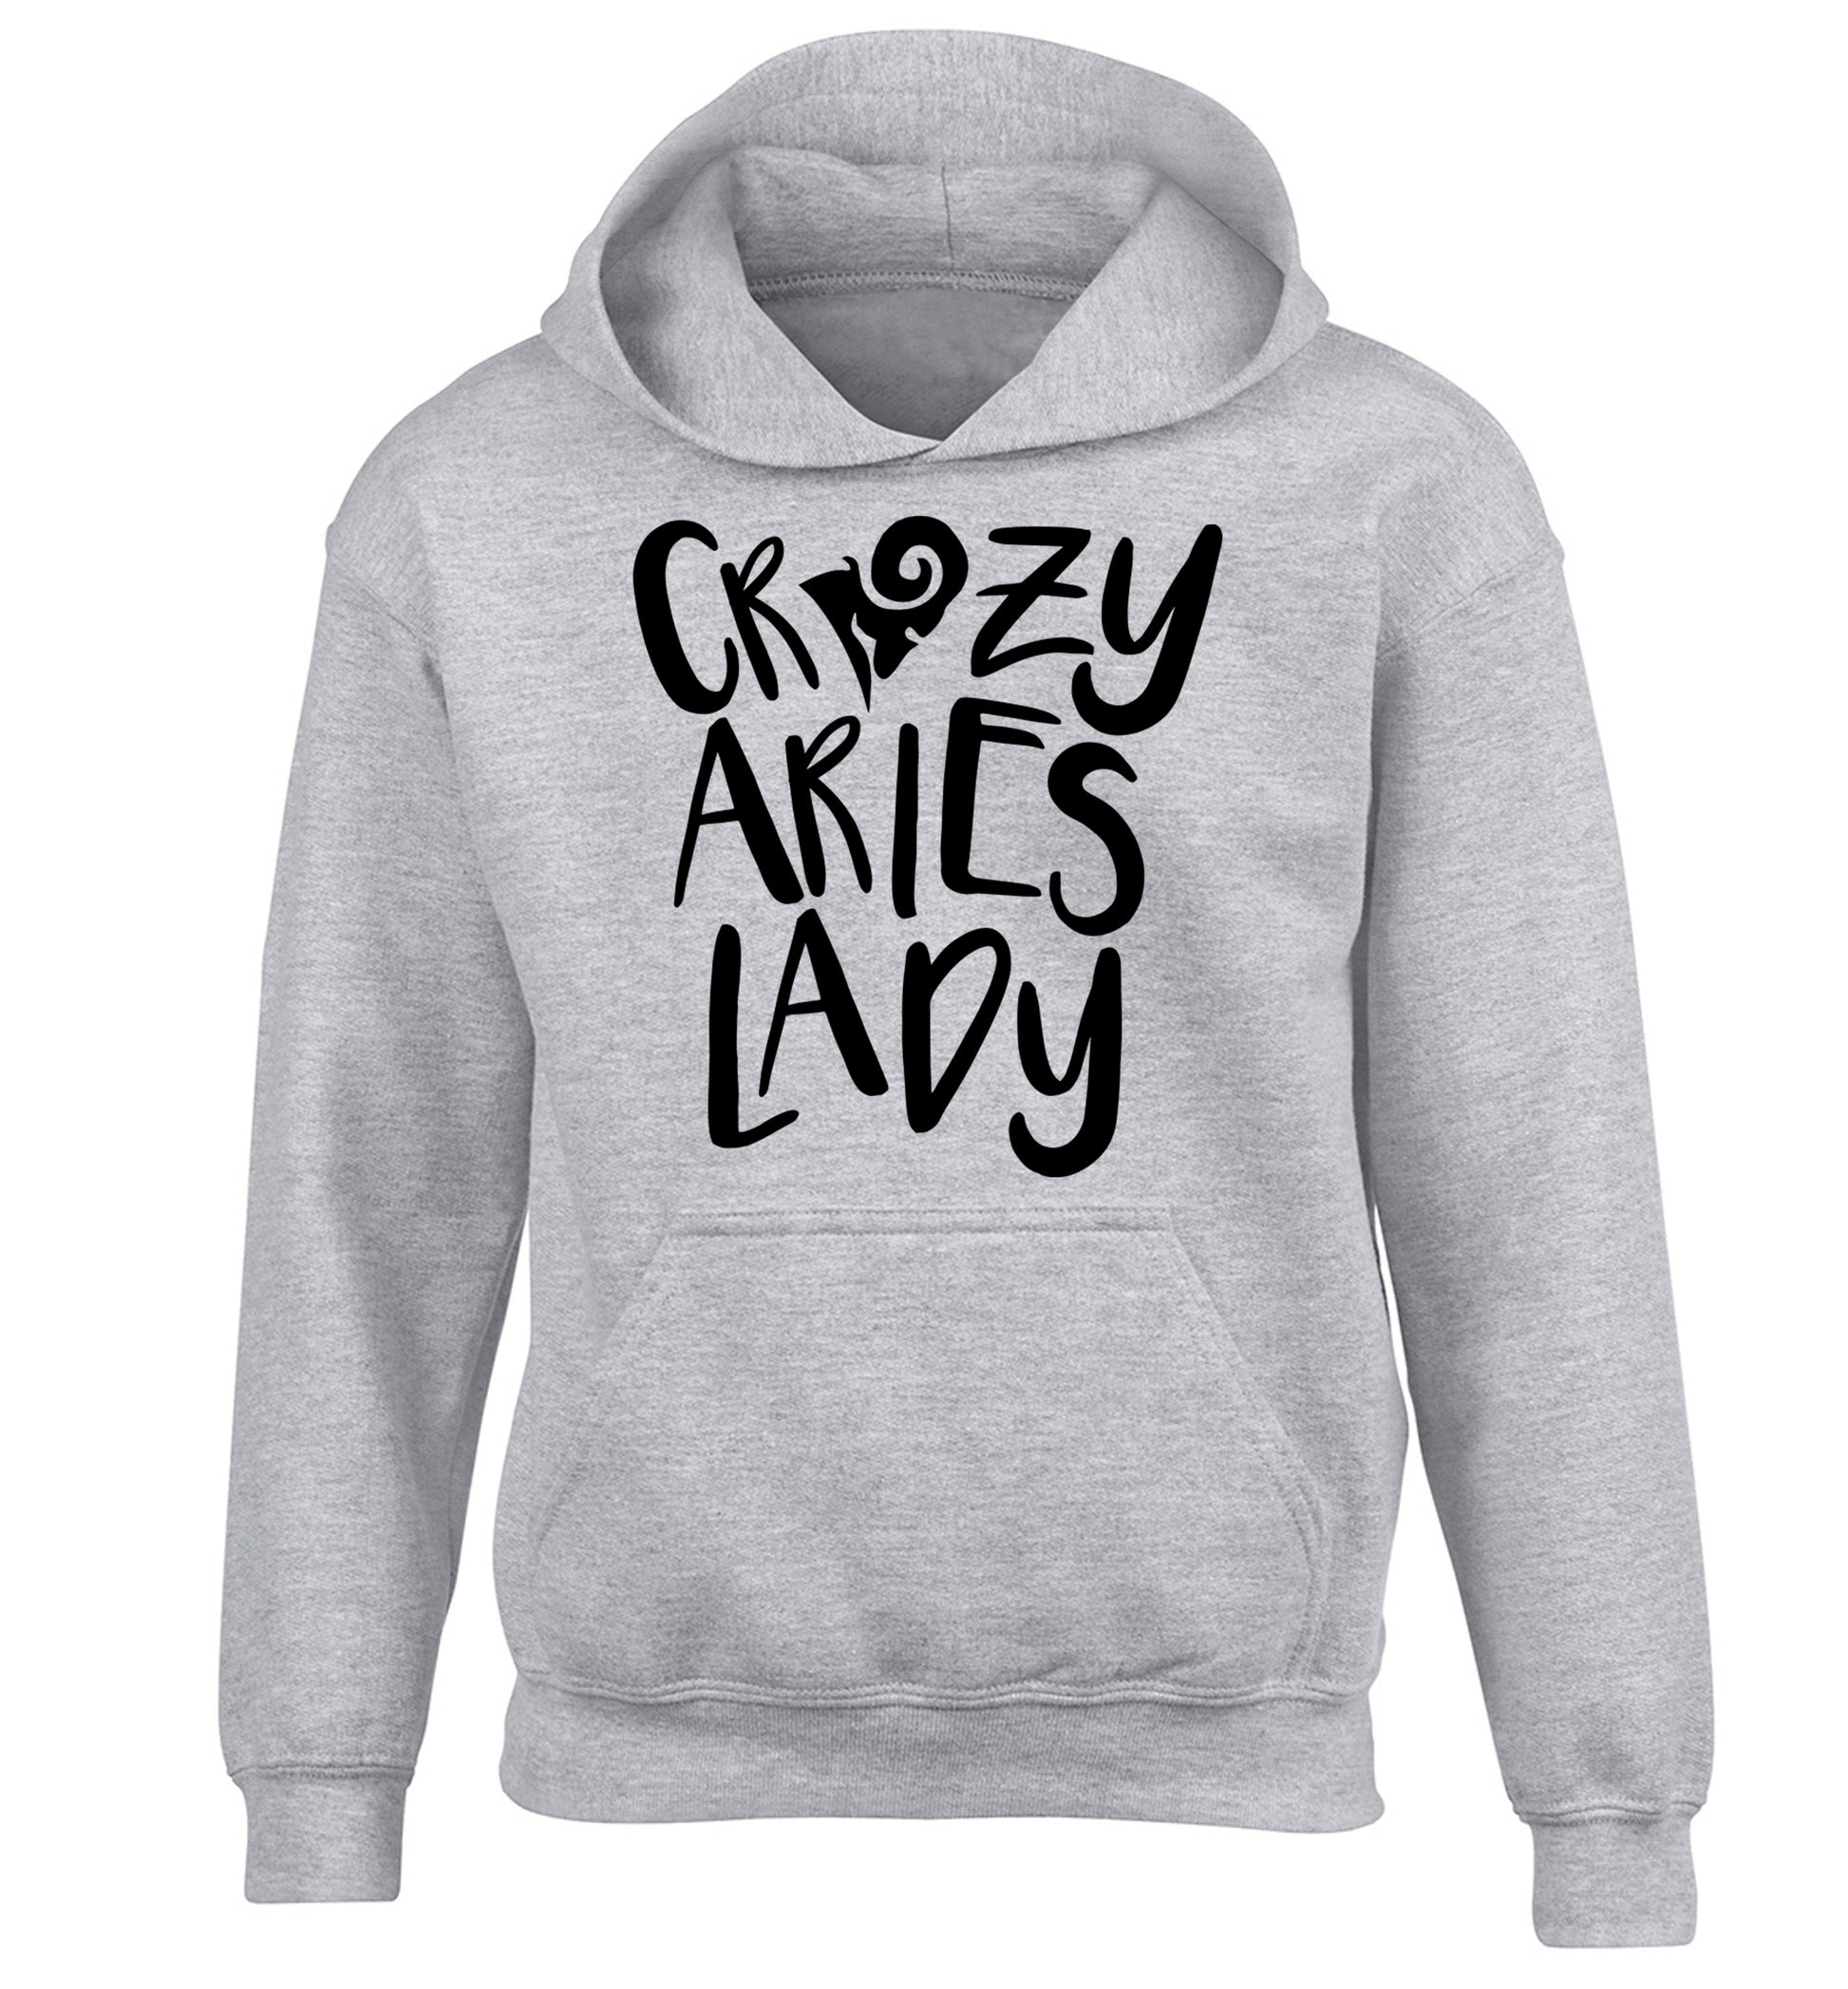 Crazy aries lady children's grey hoodie 12-13 Years